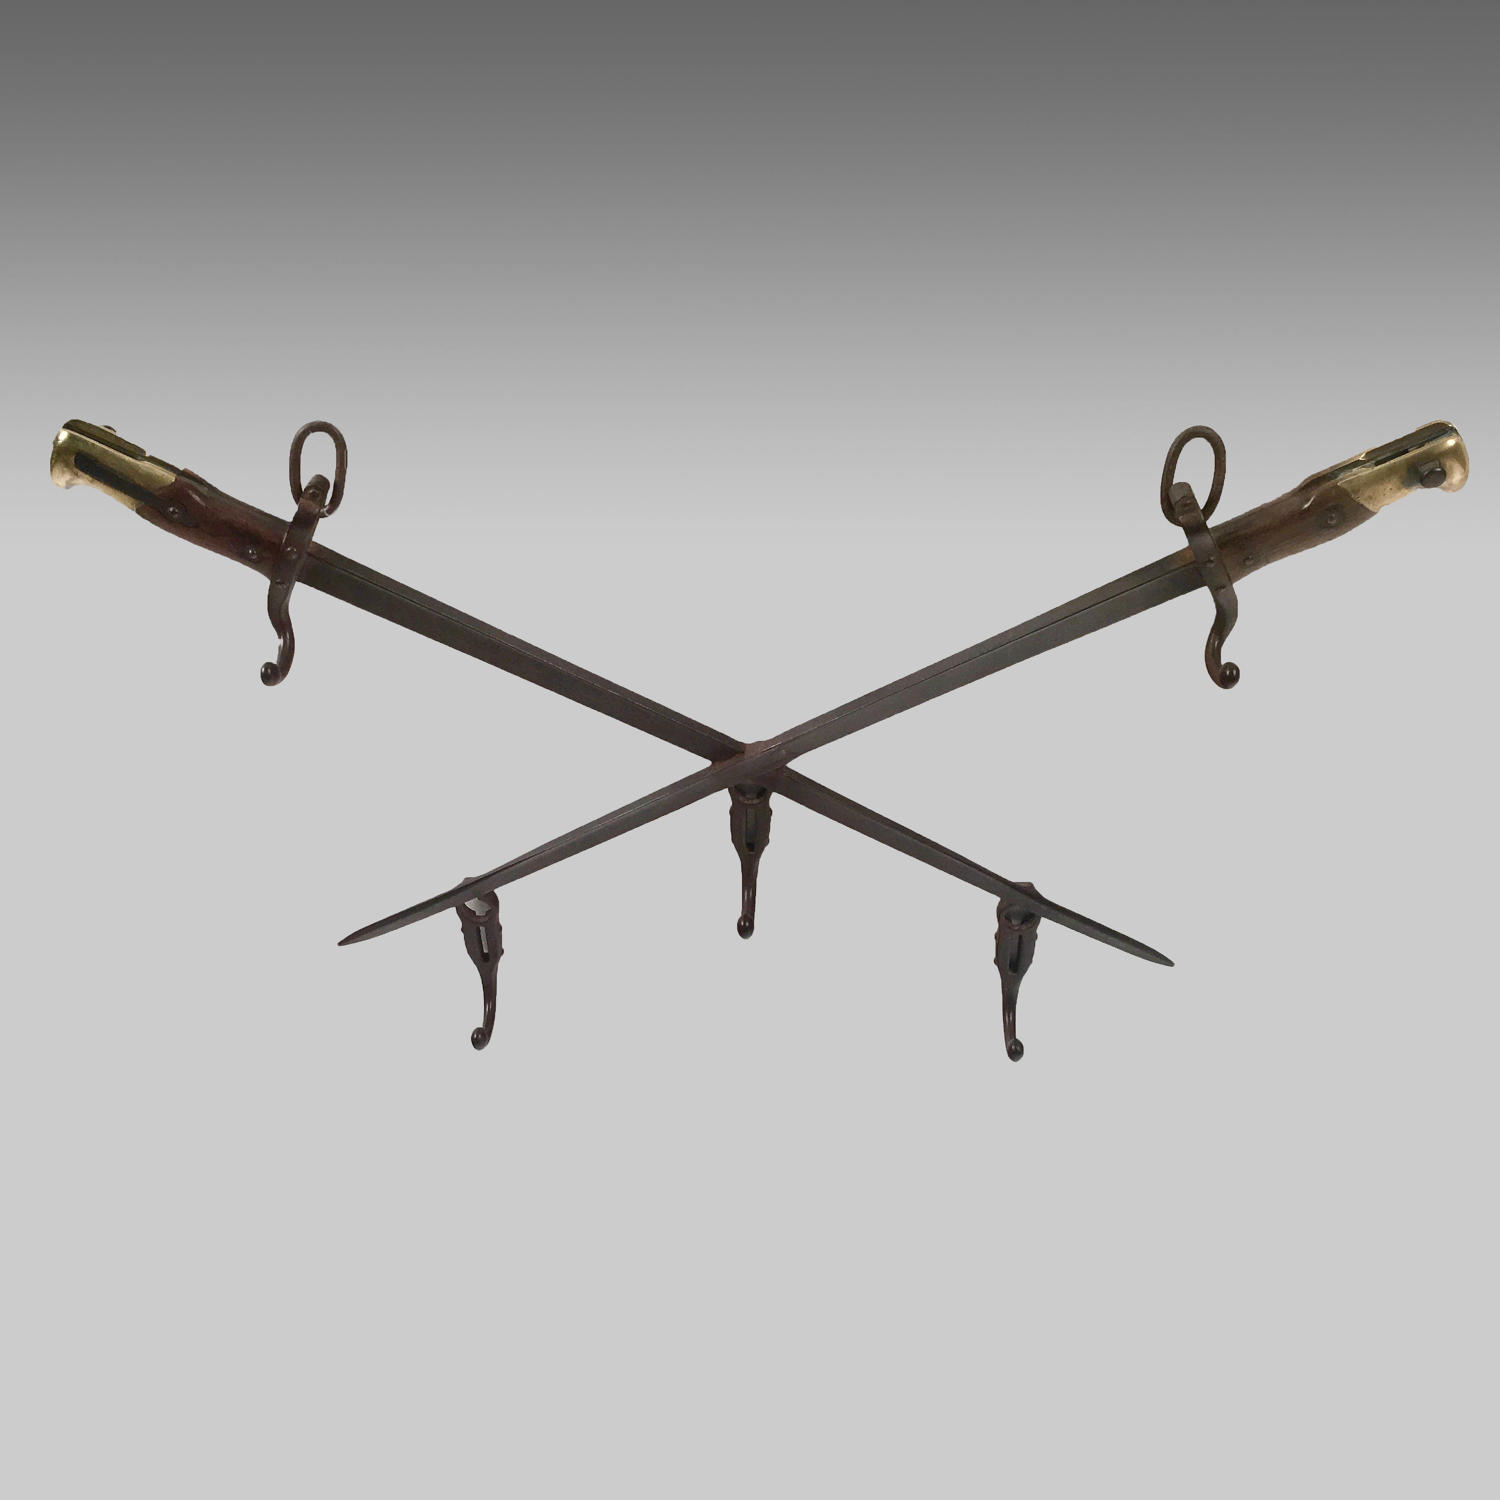 19th century French bayonet coat hooks